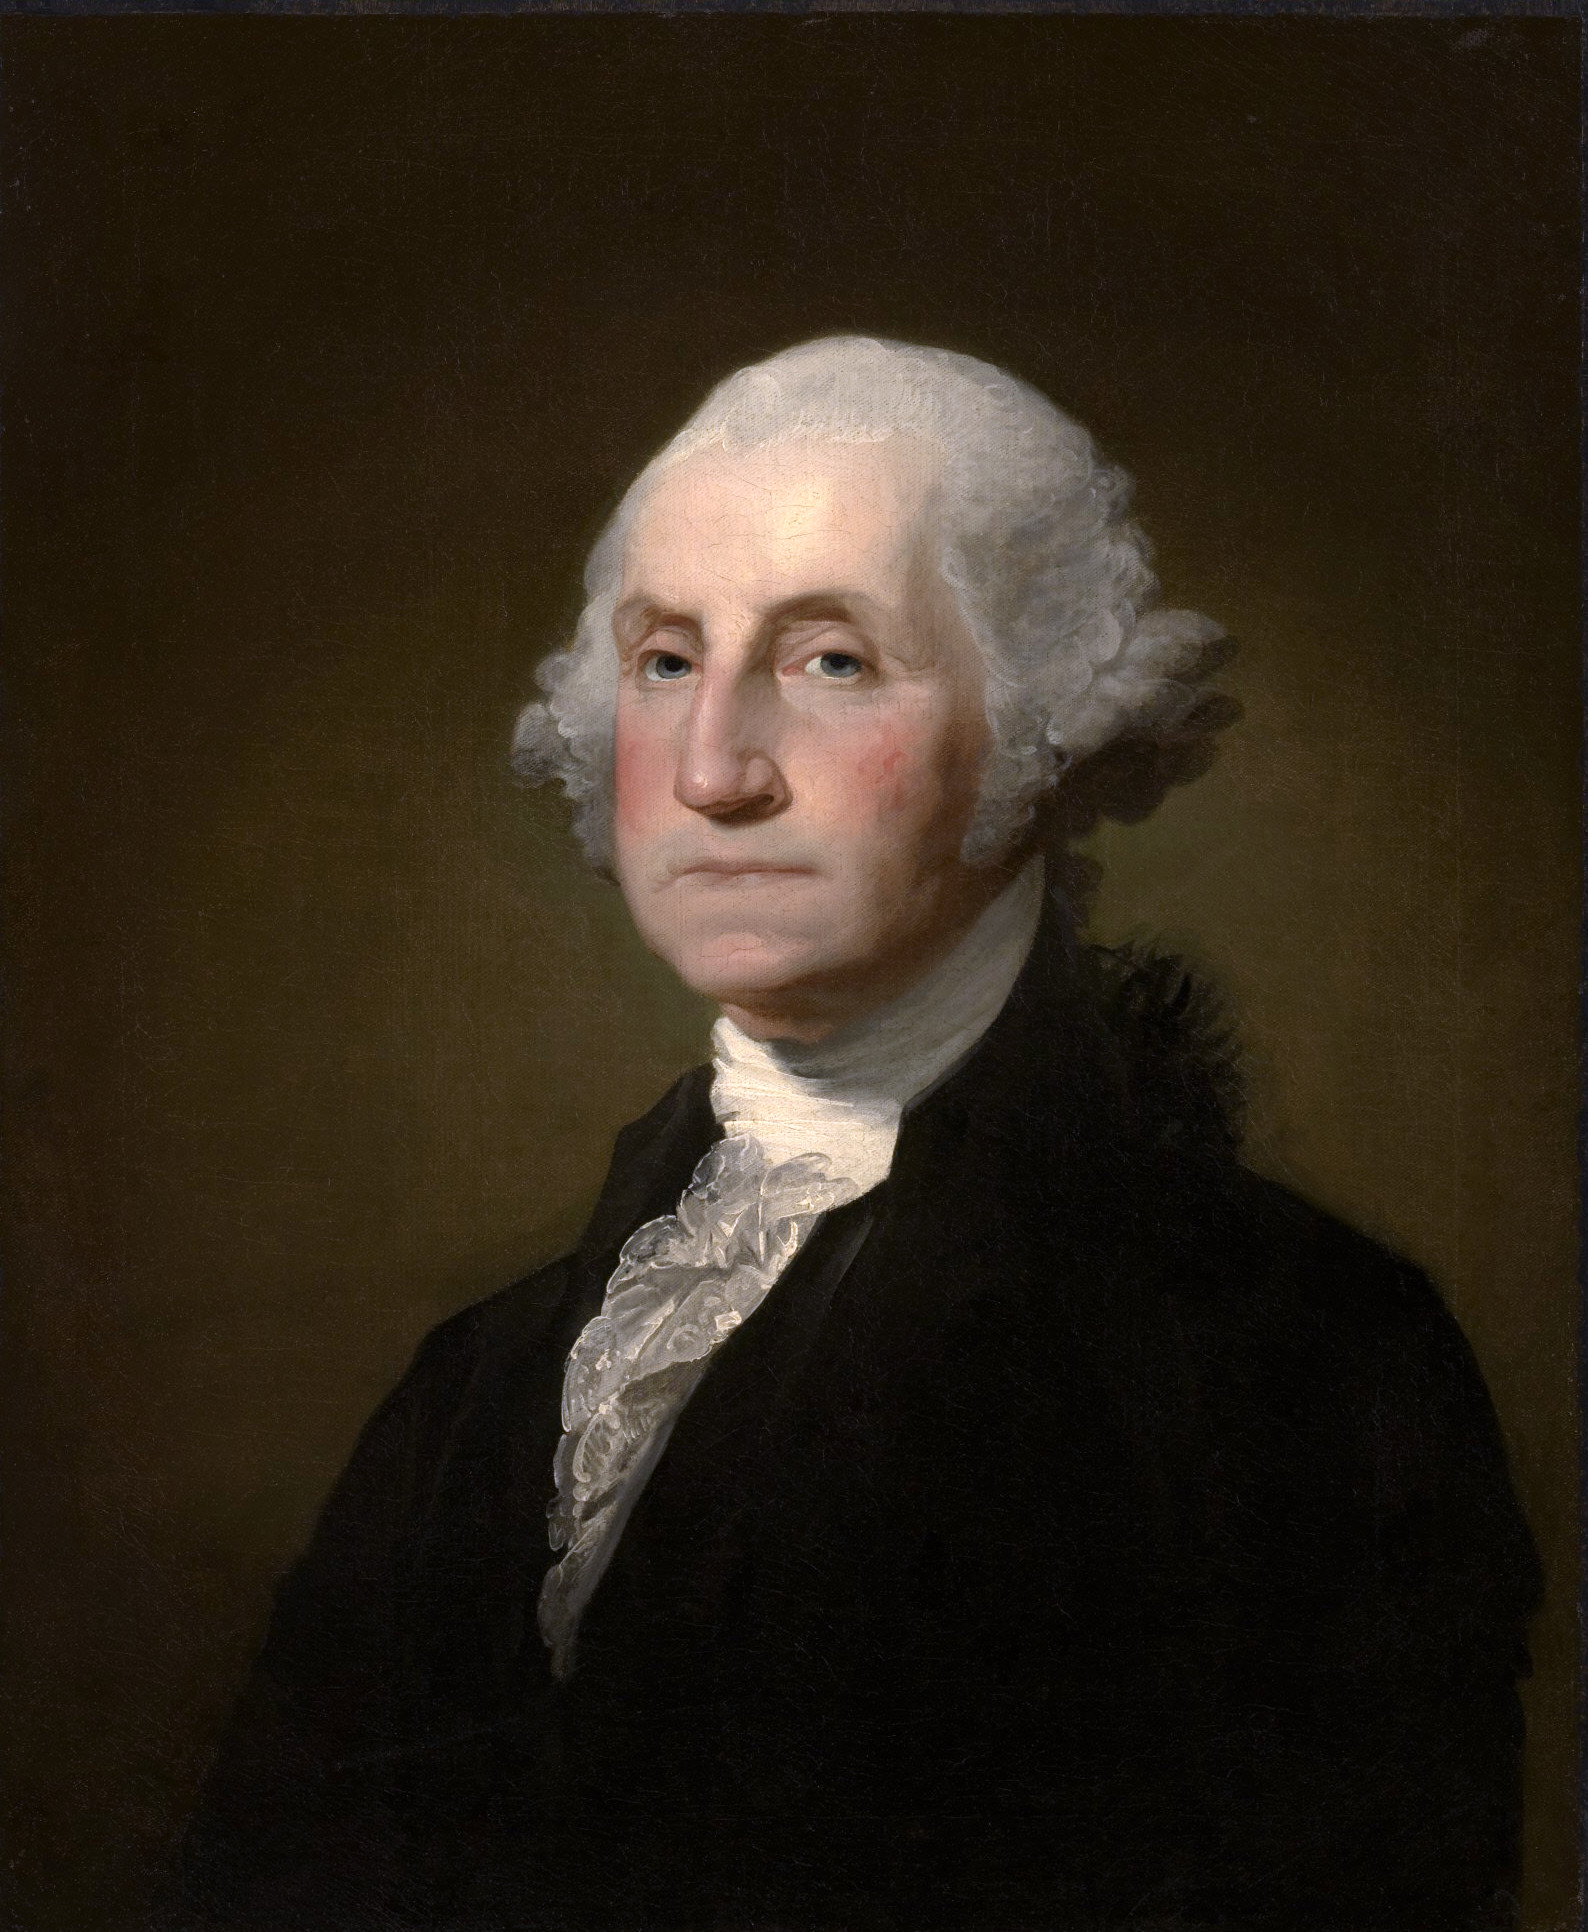 2) George Washington